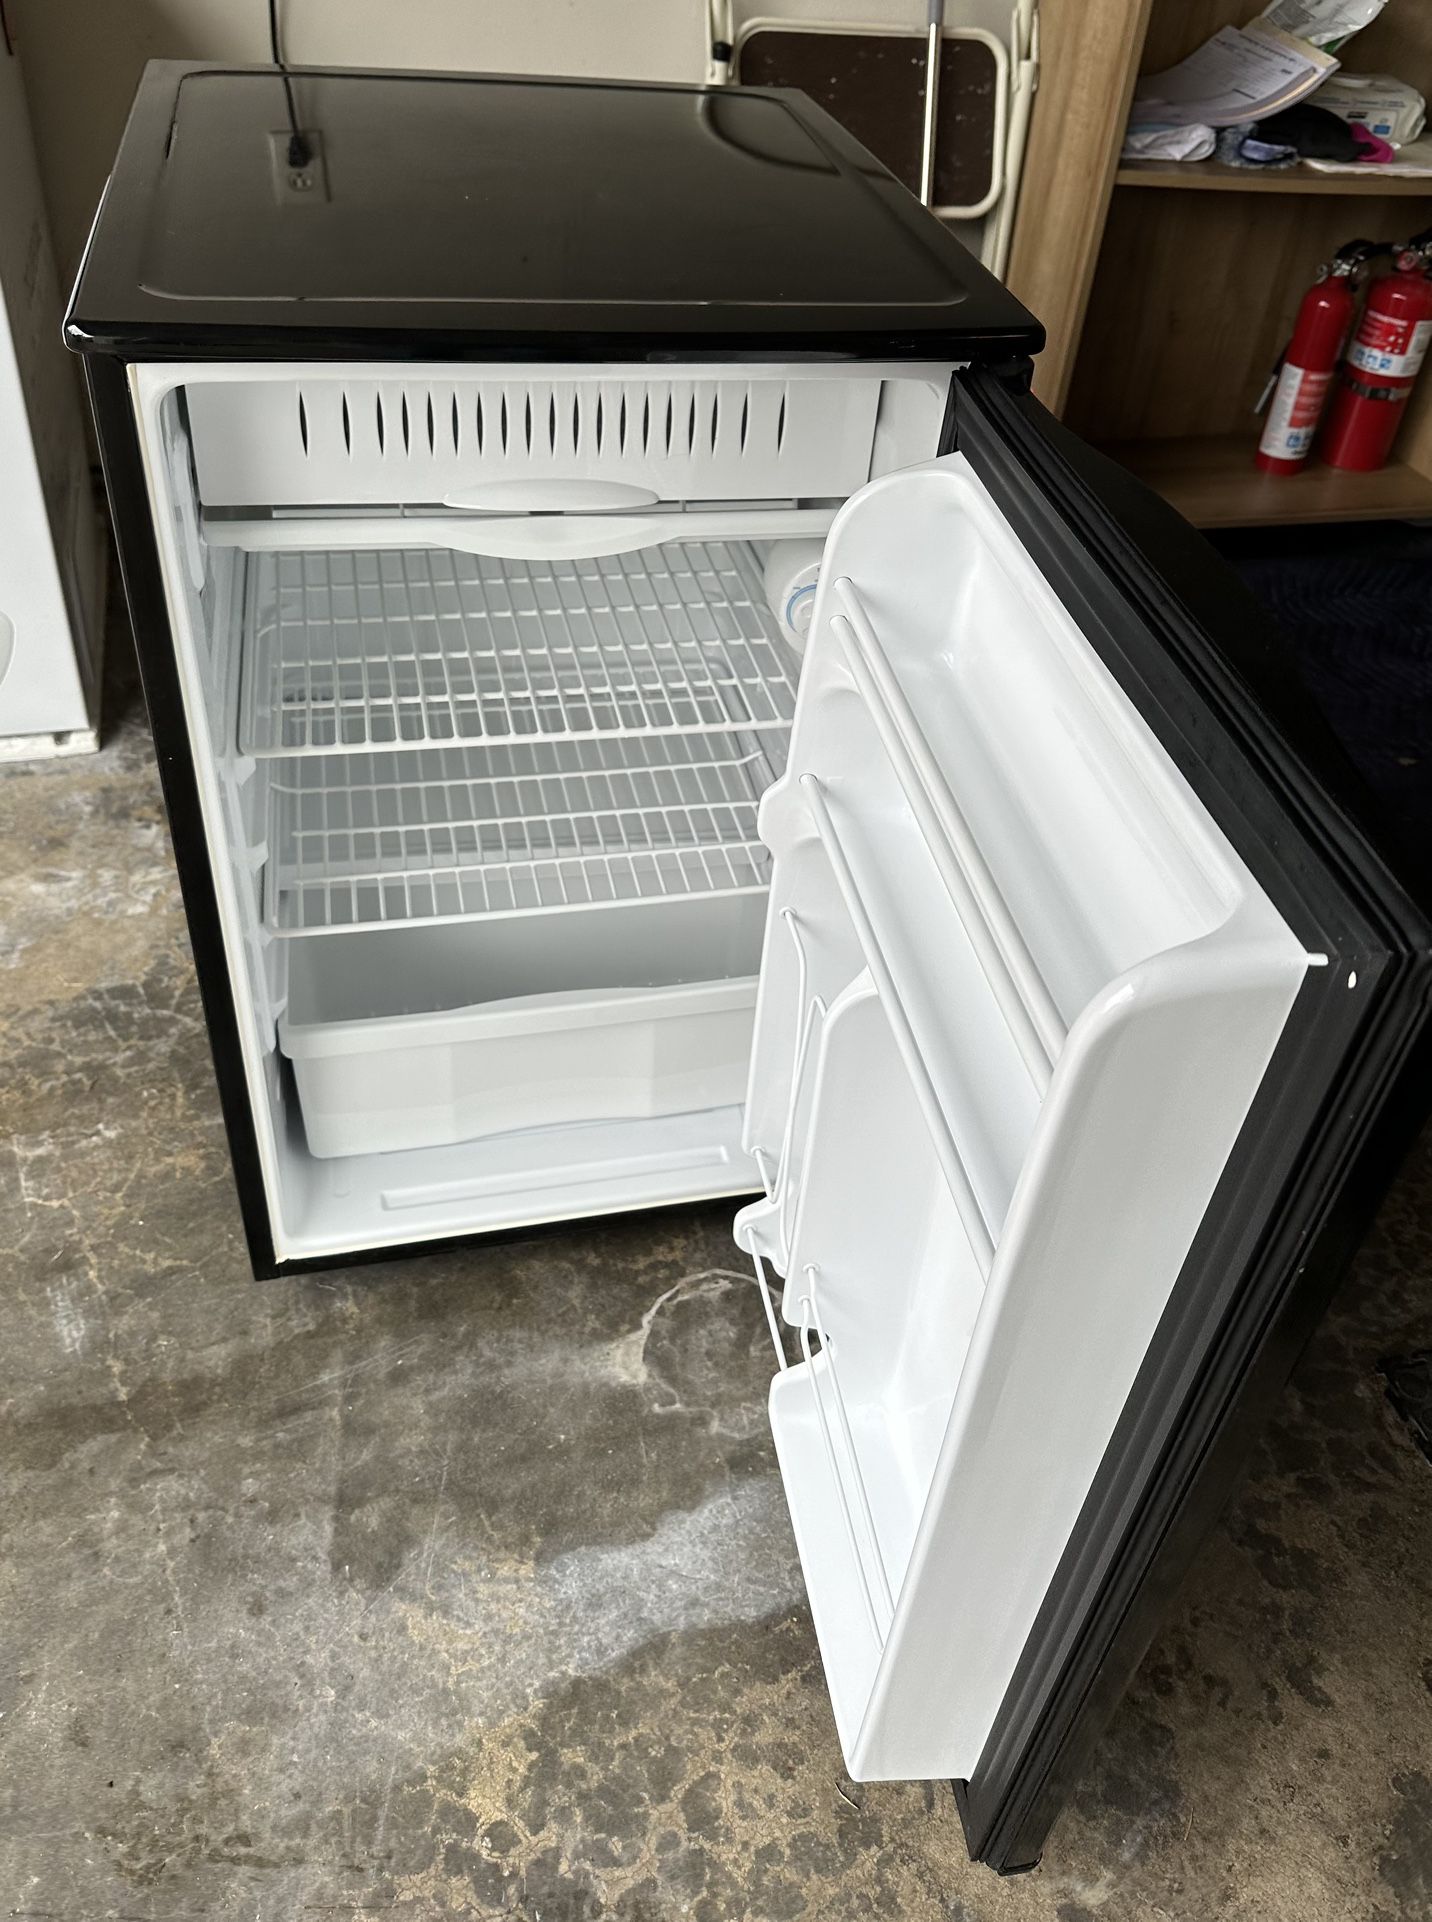 mini refrigerator with temperature control